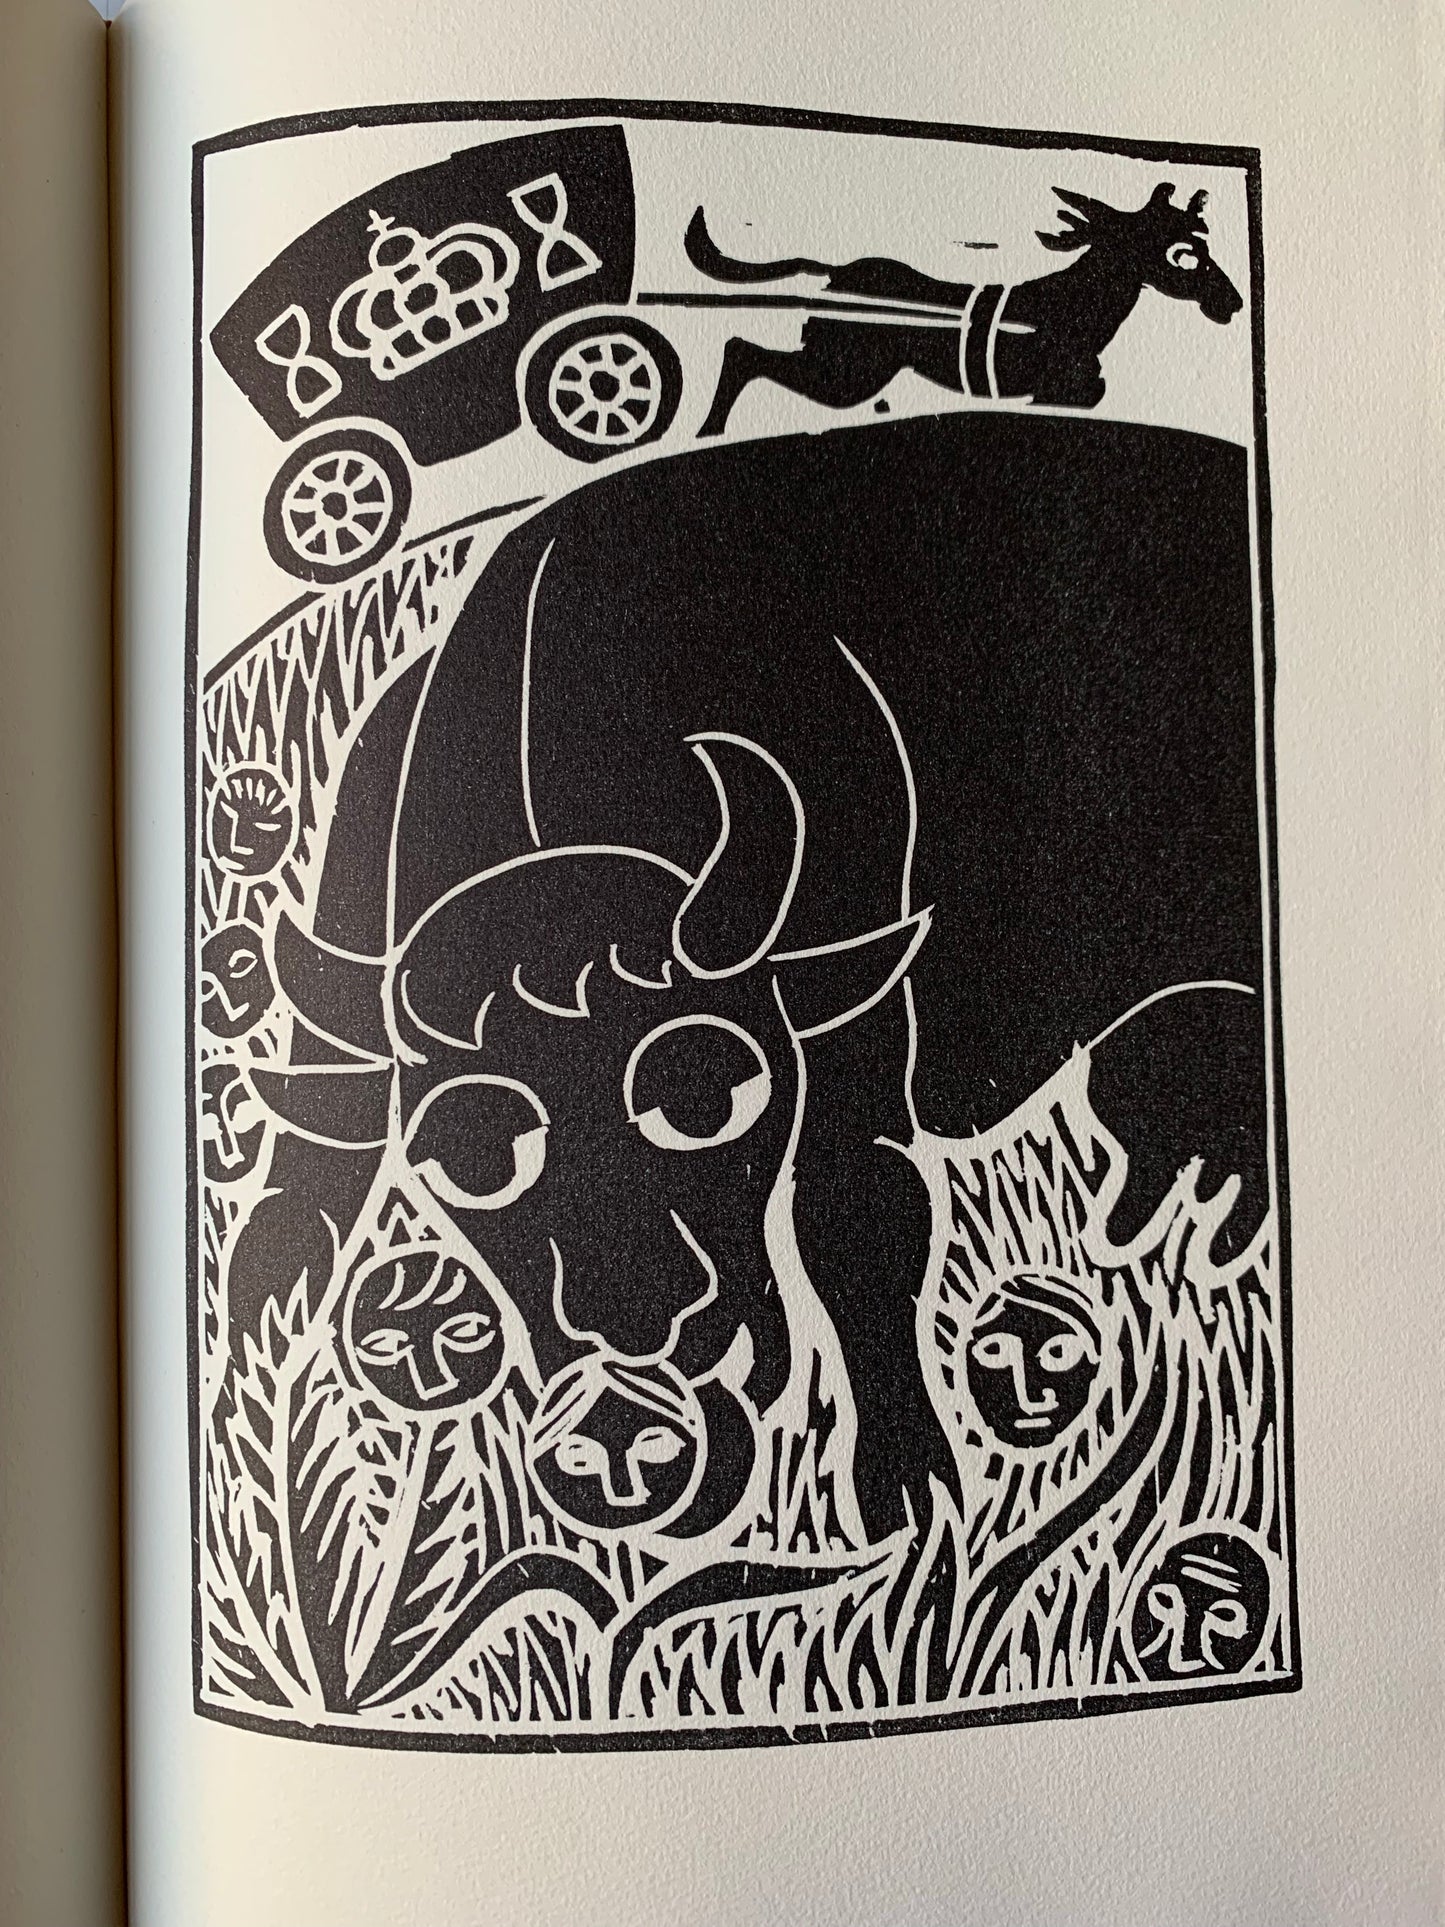 Jan Garff. “Moderne Dansk Grafik og Lyrik”, original prints by J. F. Willumsen a.o, 1960